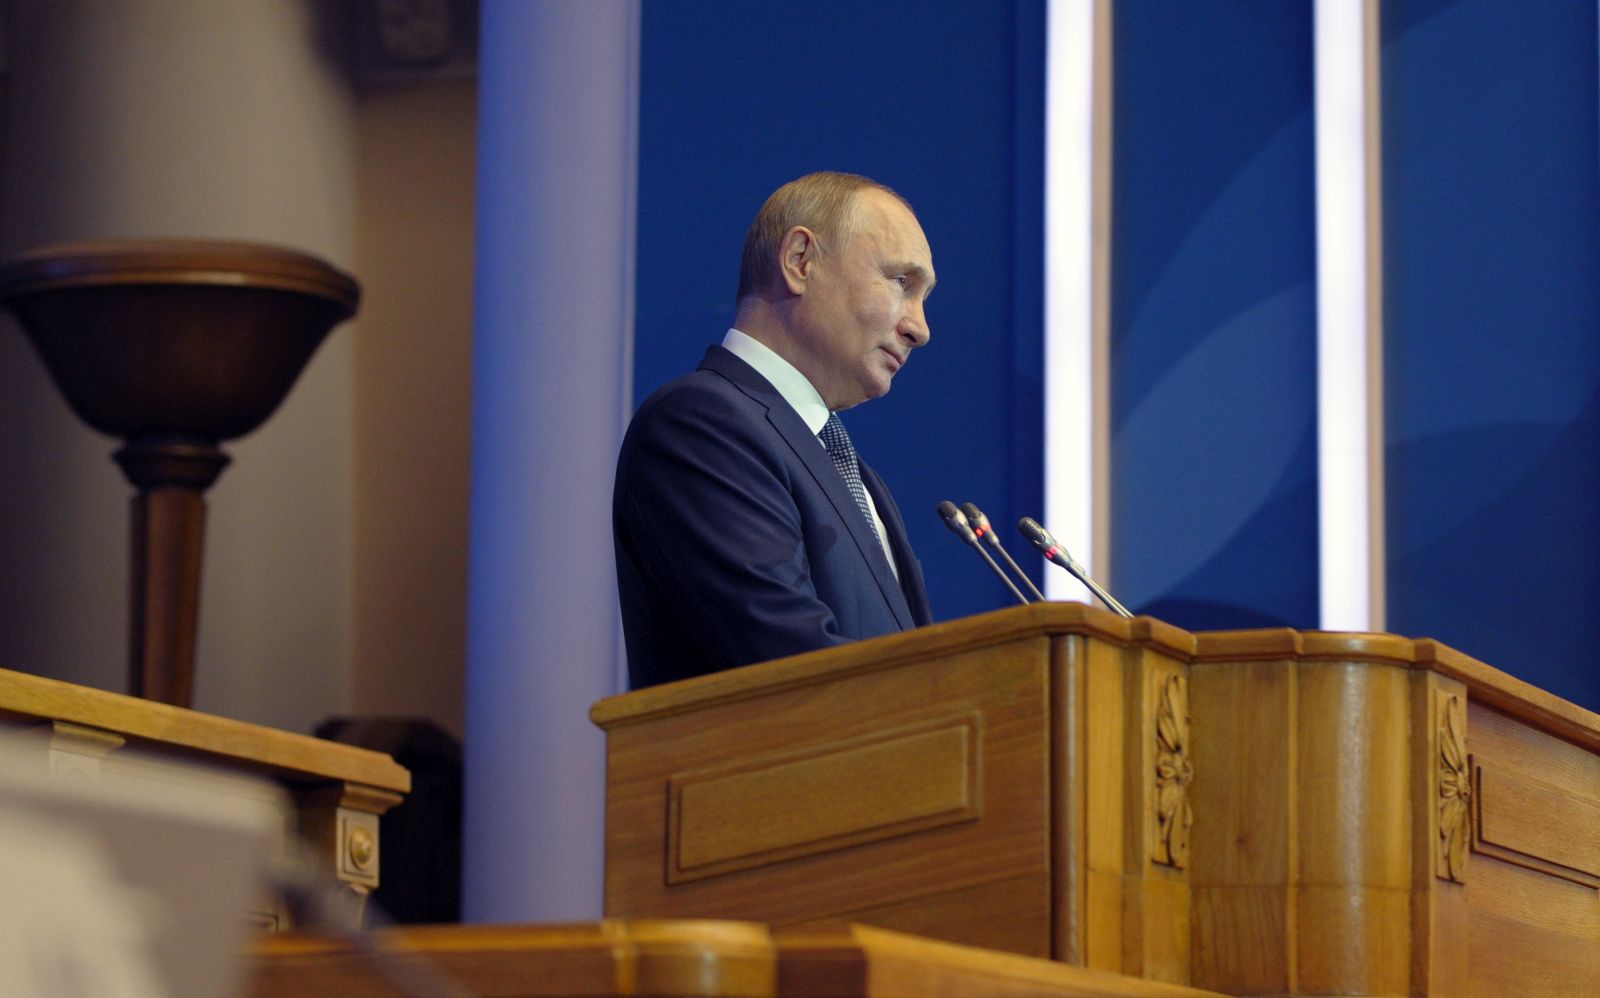 epa09523876 Russian President Vladimir Putin delivers a speech during the Third Eurasian Women's Forum held at the Tauride Palace, in St. Petersburg, Russia, 14 October 2021.  EPA/MIKHAEL KLIMENTYEV / SPUTNIK / KREMLIN POOL